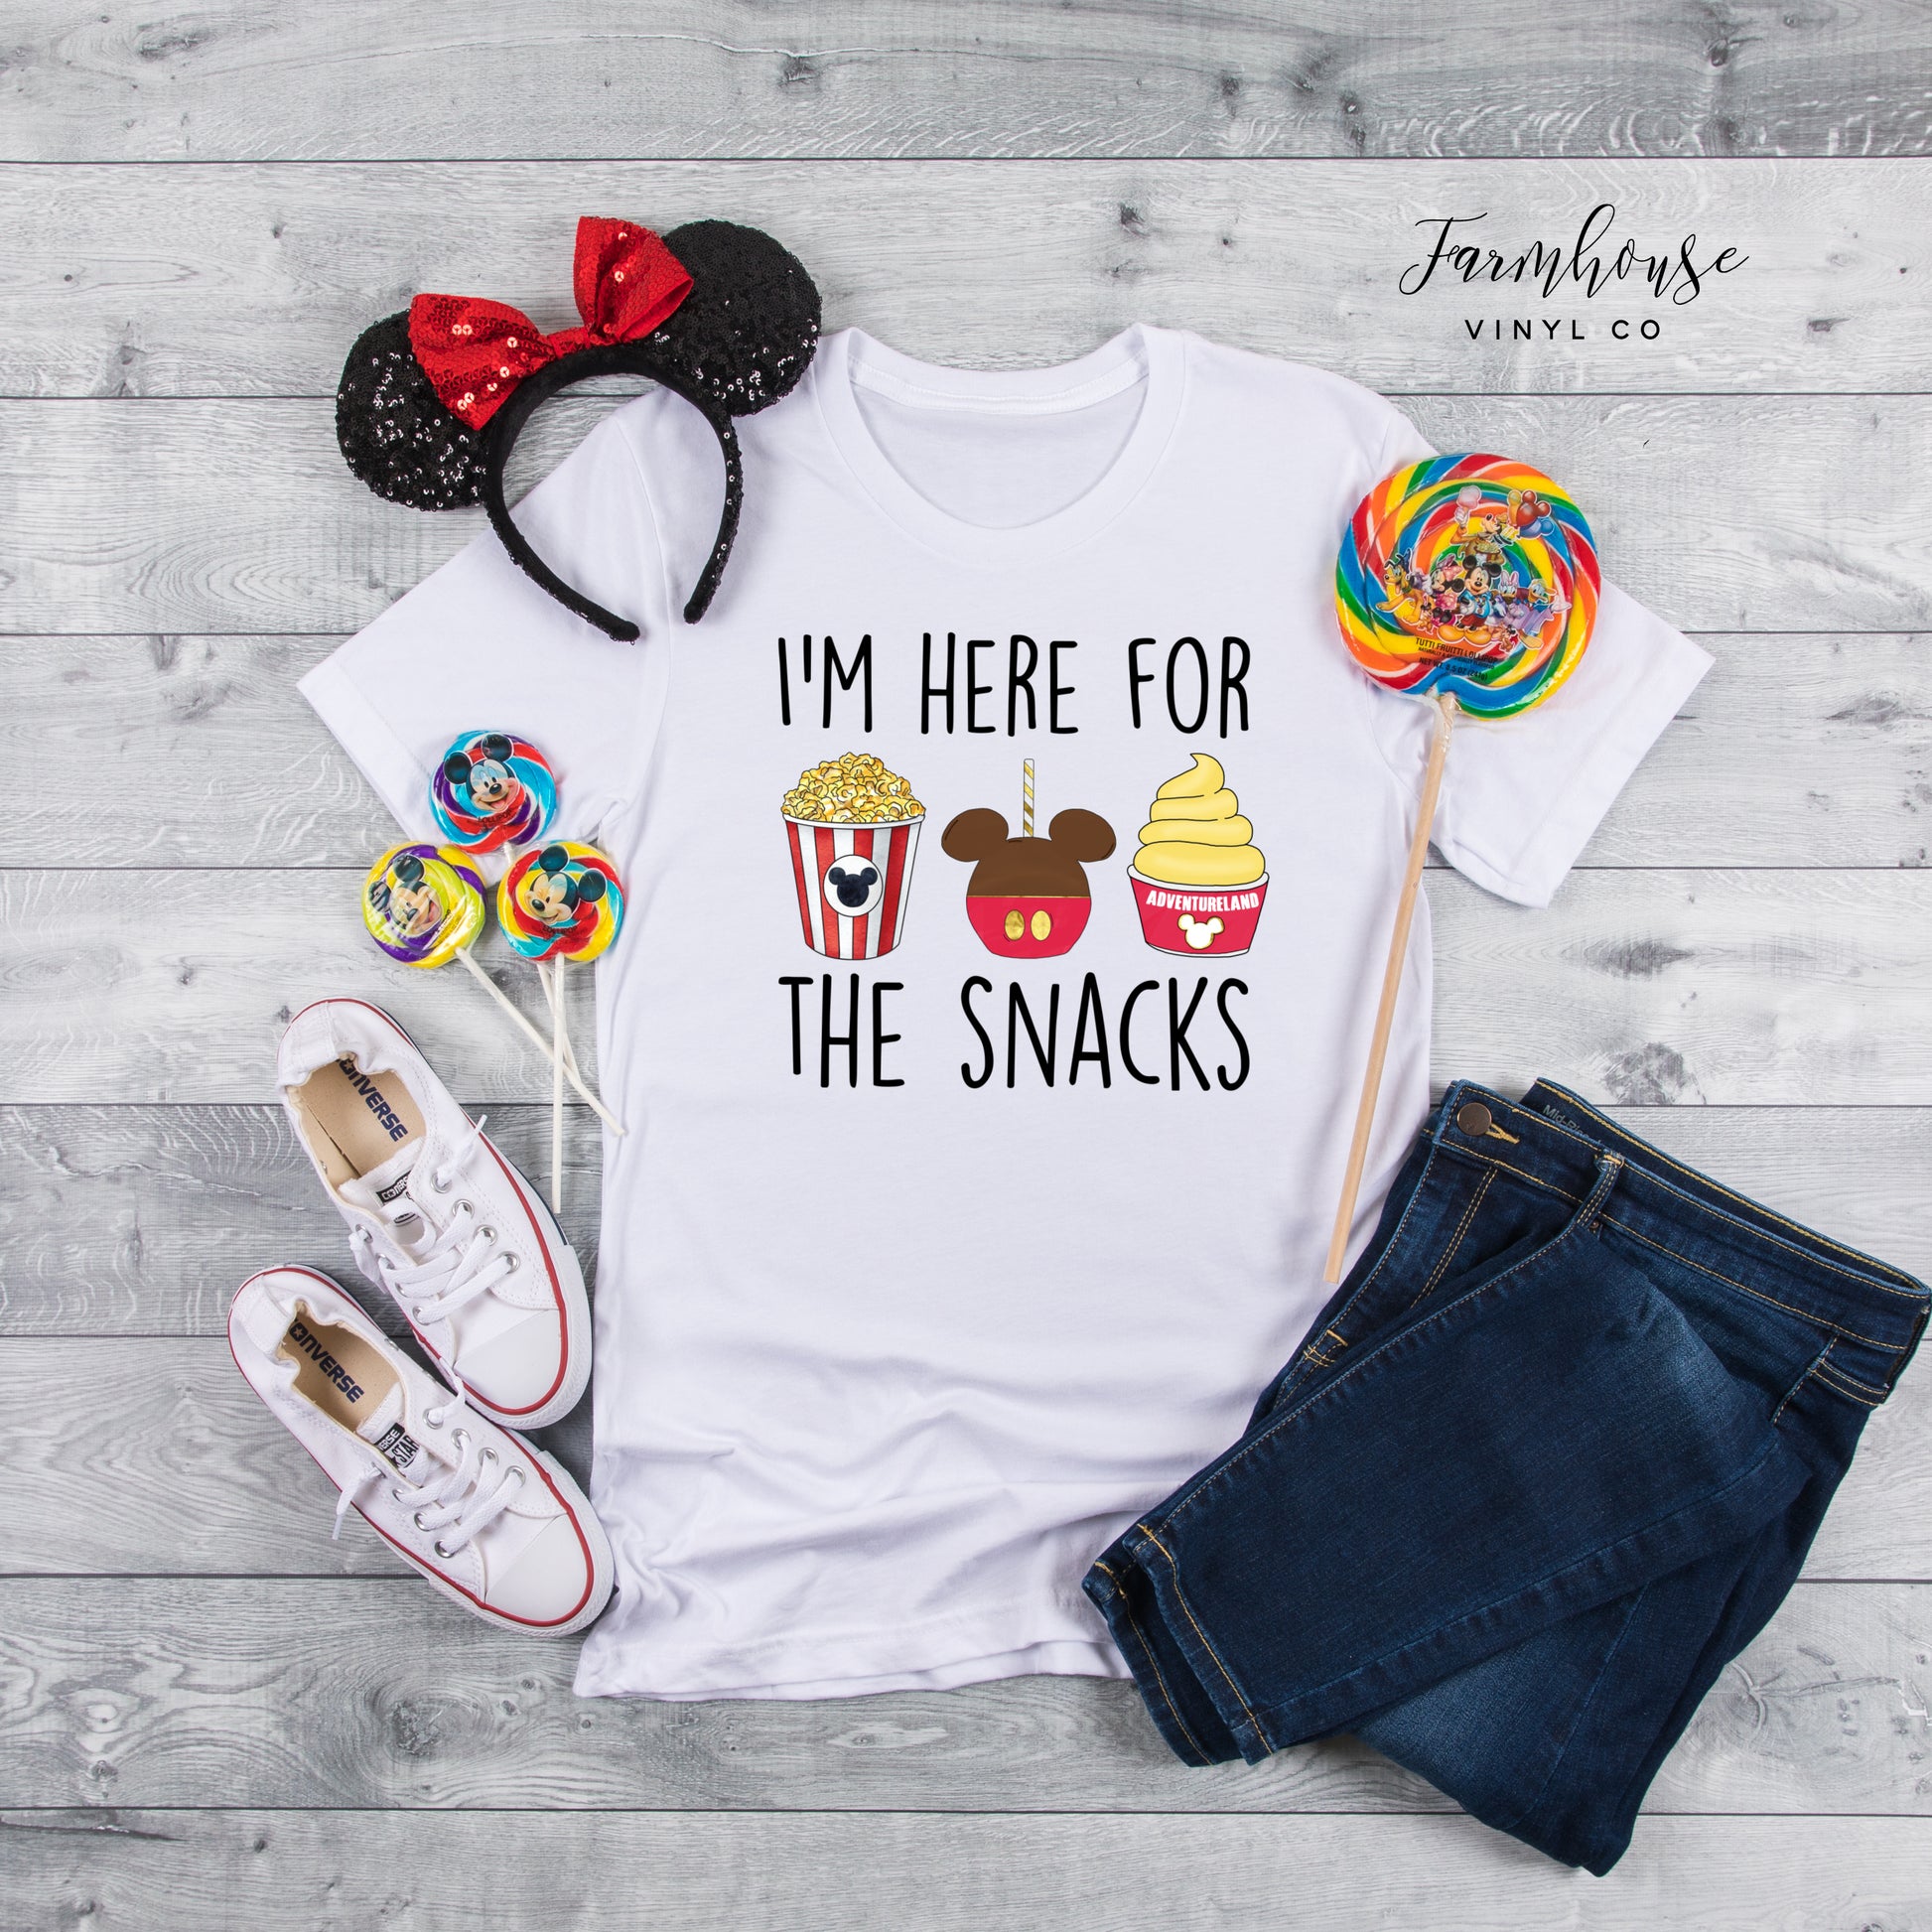 I'm Here for The Snacks Disney Shirt - Farmhouse Vinyl Co